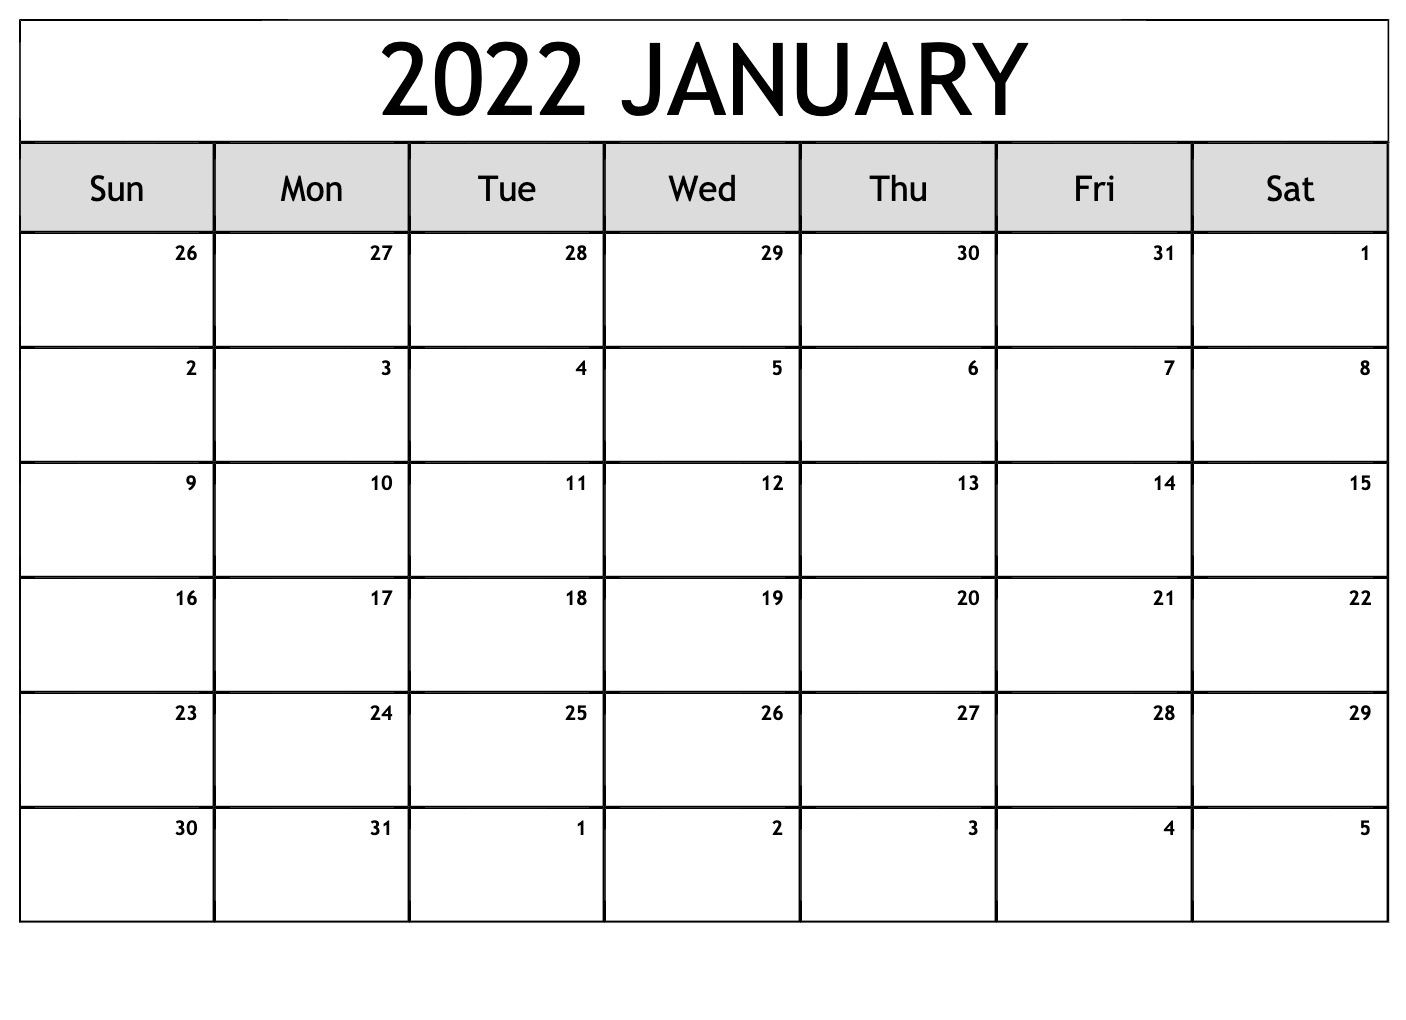 January Calendar 2022 Template - Printable Calendar Station